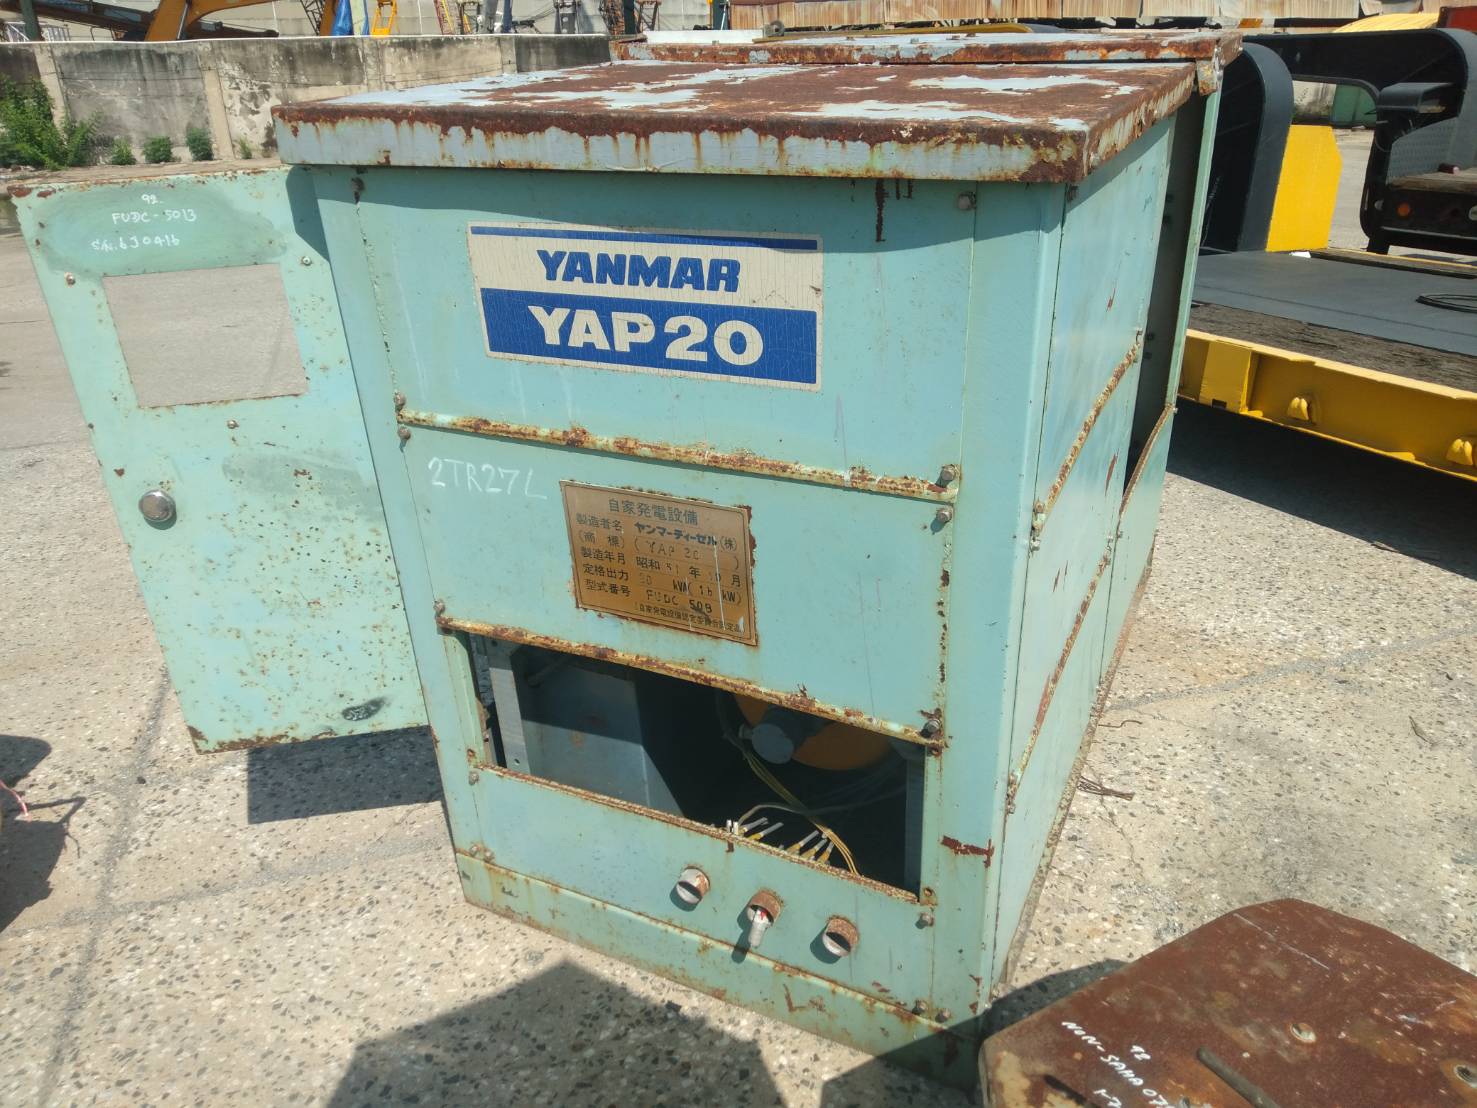 YANMAR-YAP-20-FUDC-5013 (1)